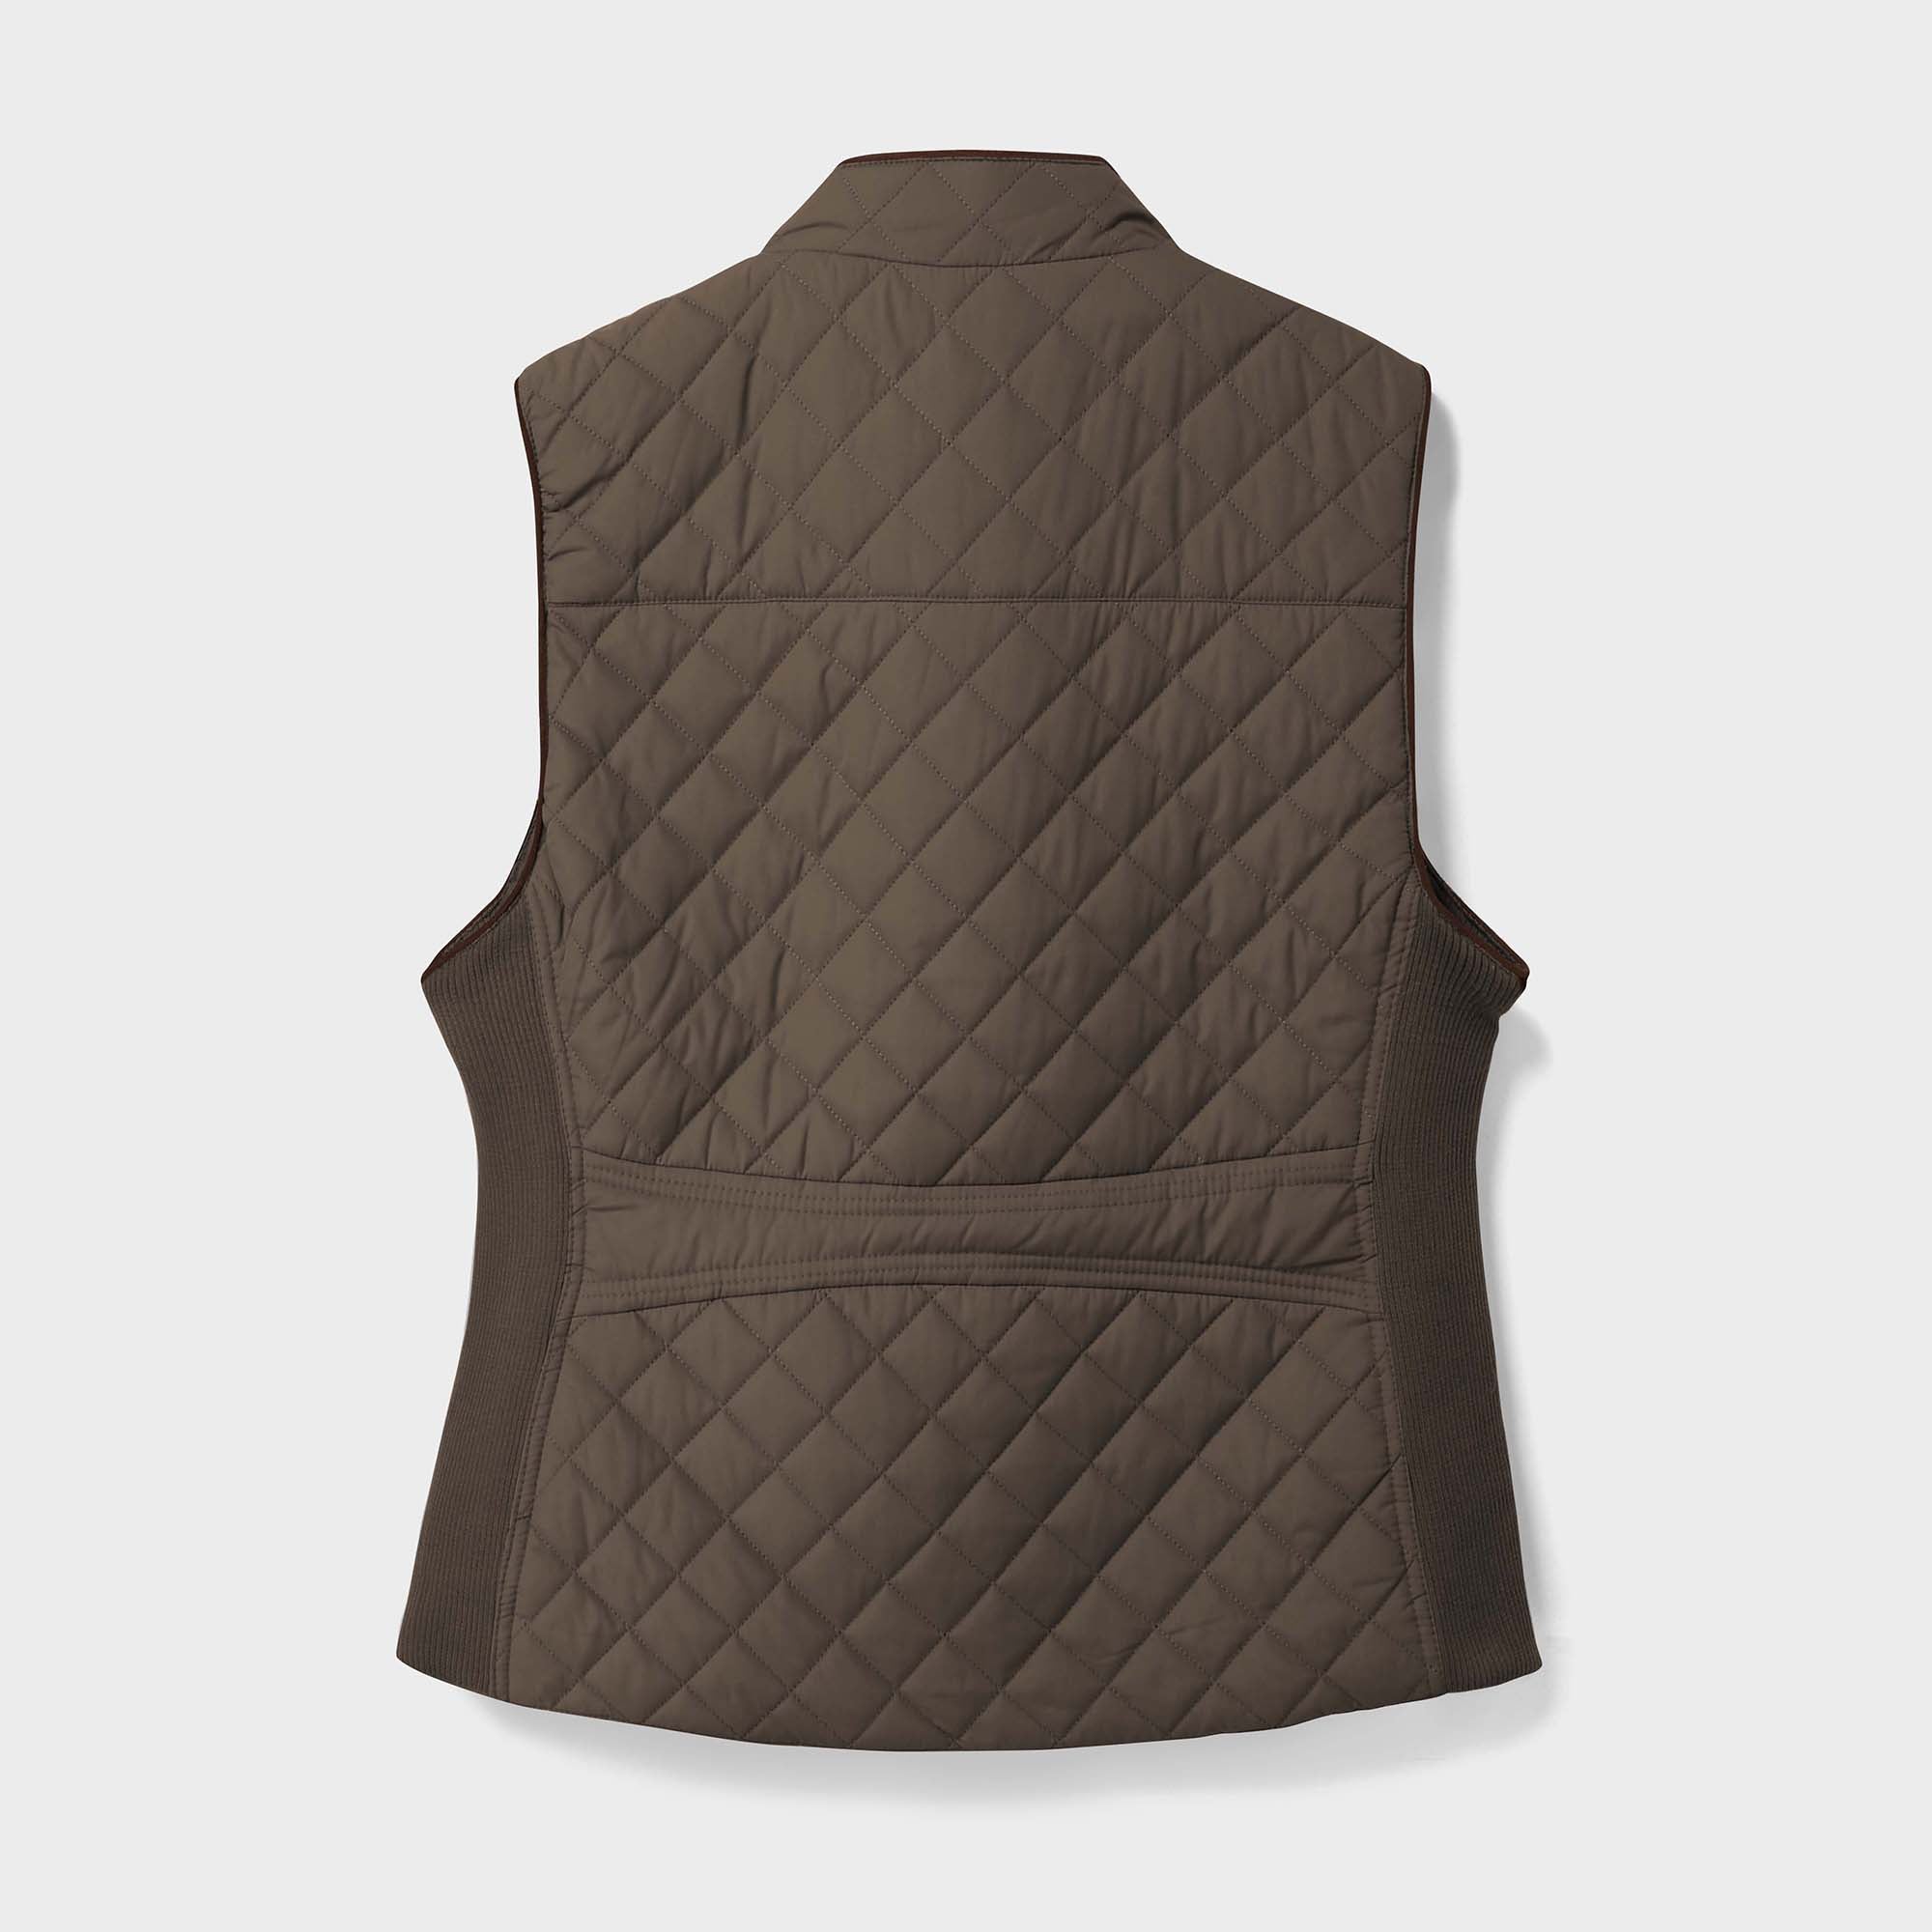 women vest_women puffer vest_sweater vest women_sweat vest for women_ladies vests_women's dressy vests_women fashion vest_Olive